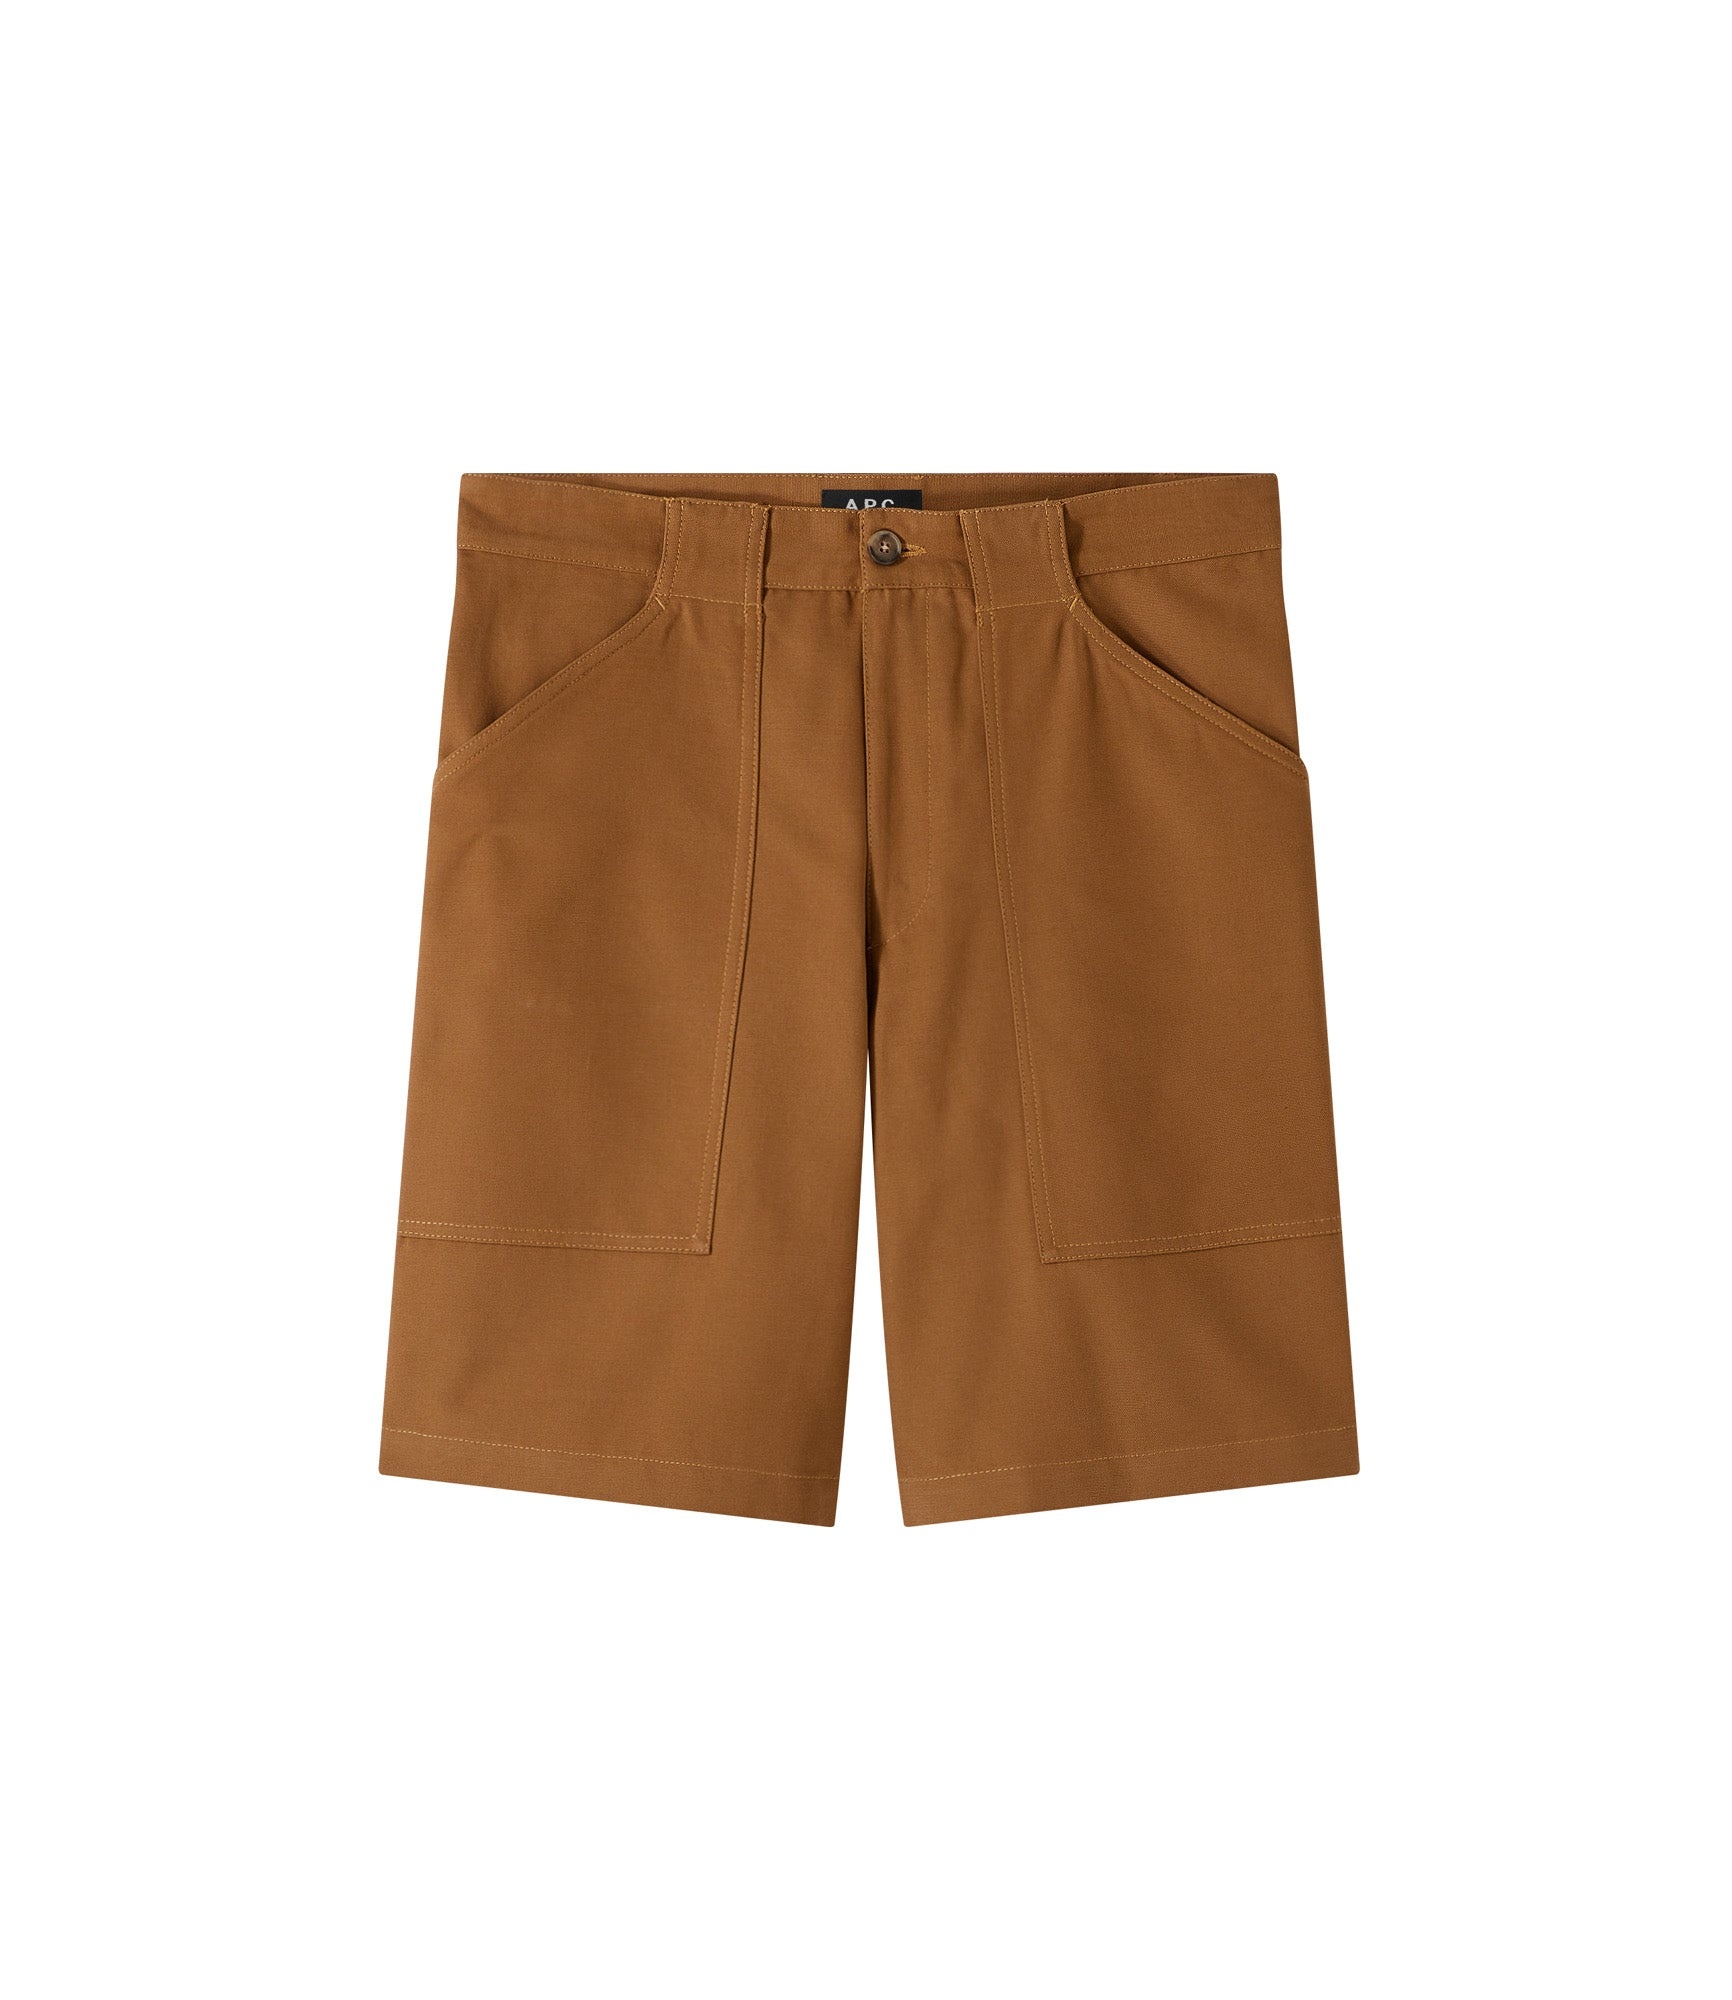 Melbourne shorts - 1